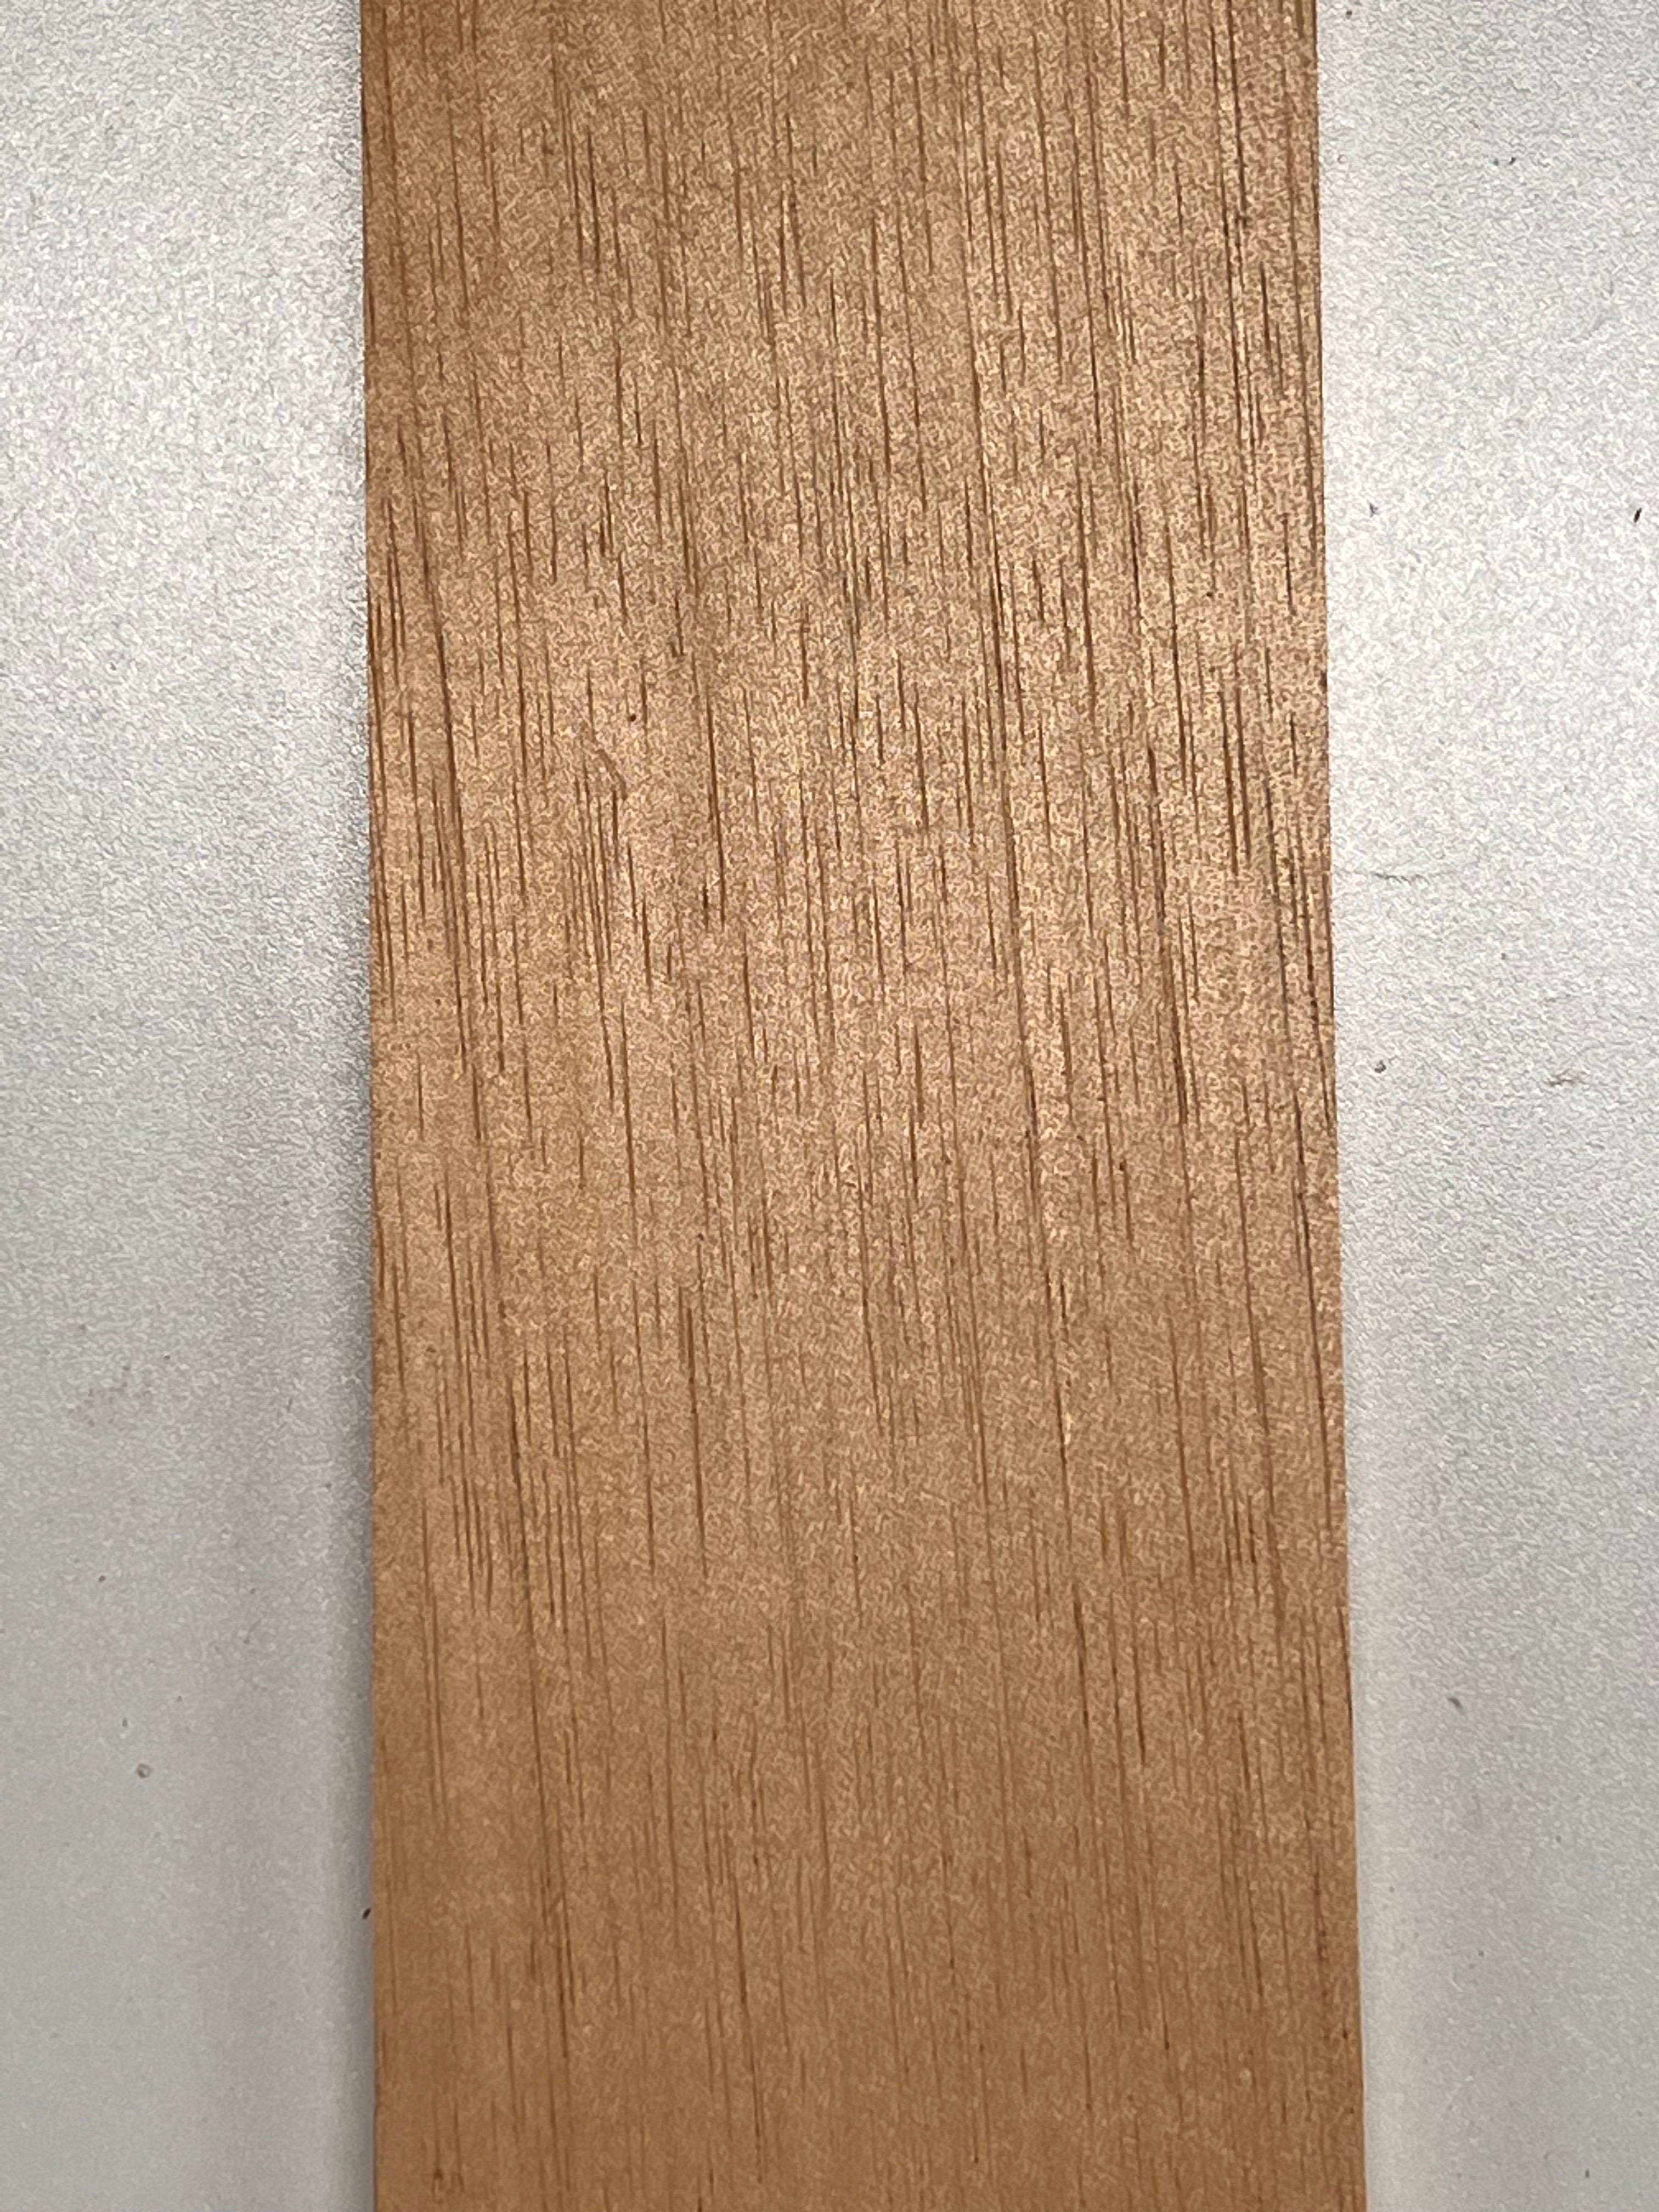 Spanish Cedar Thin Stock Lumber Board Wood Blank